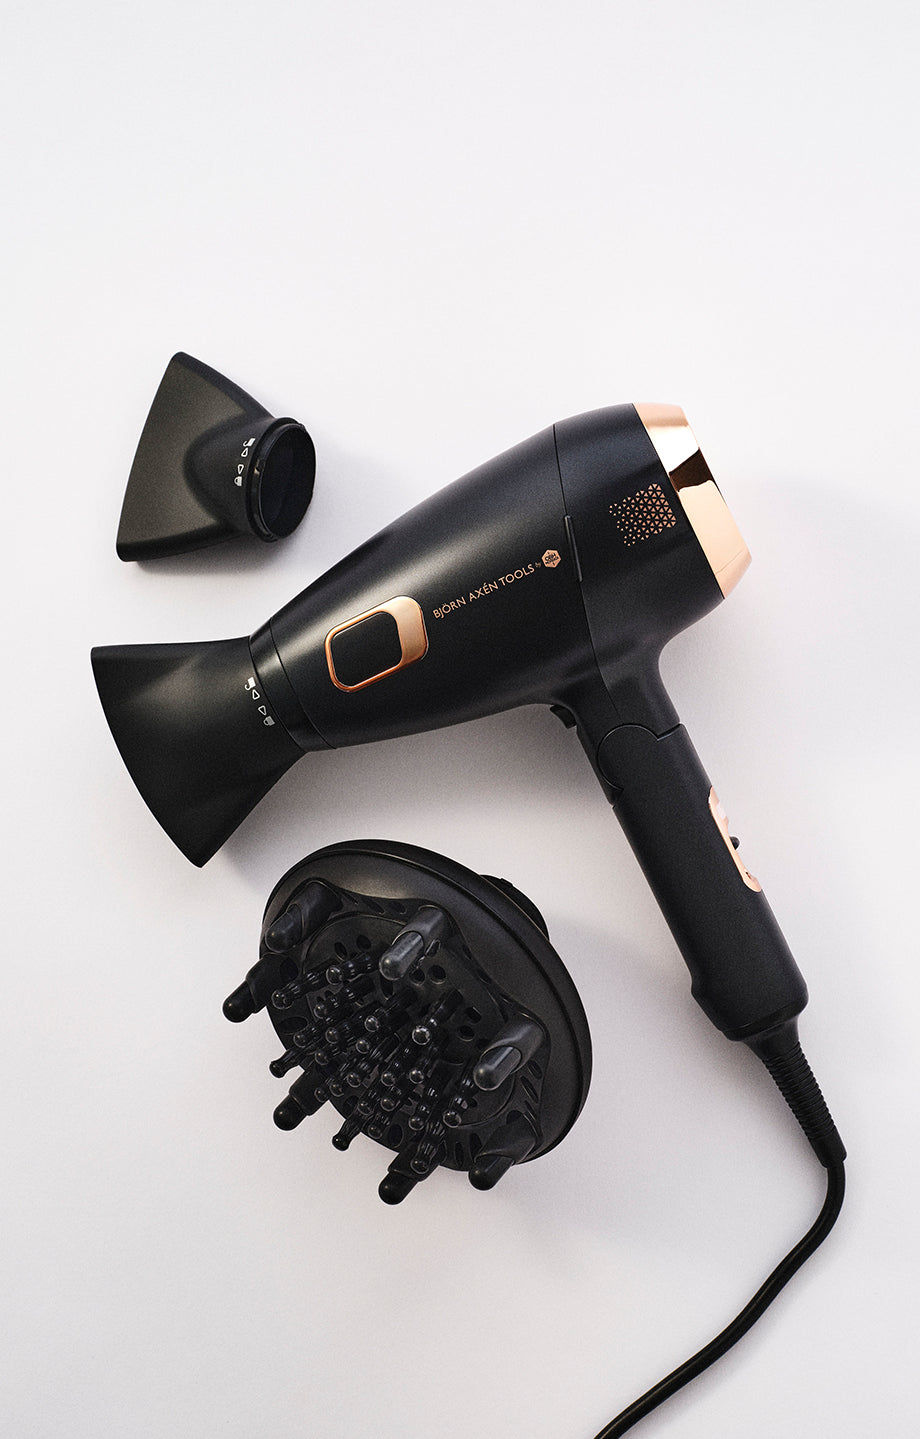 An innovative and powerful hair dryer 